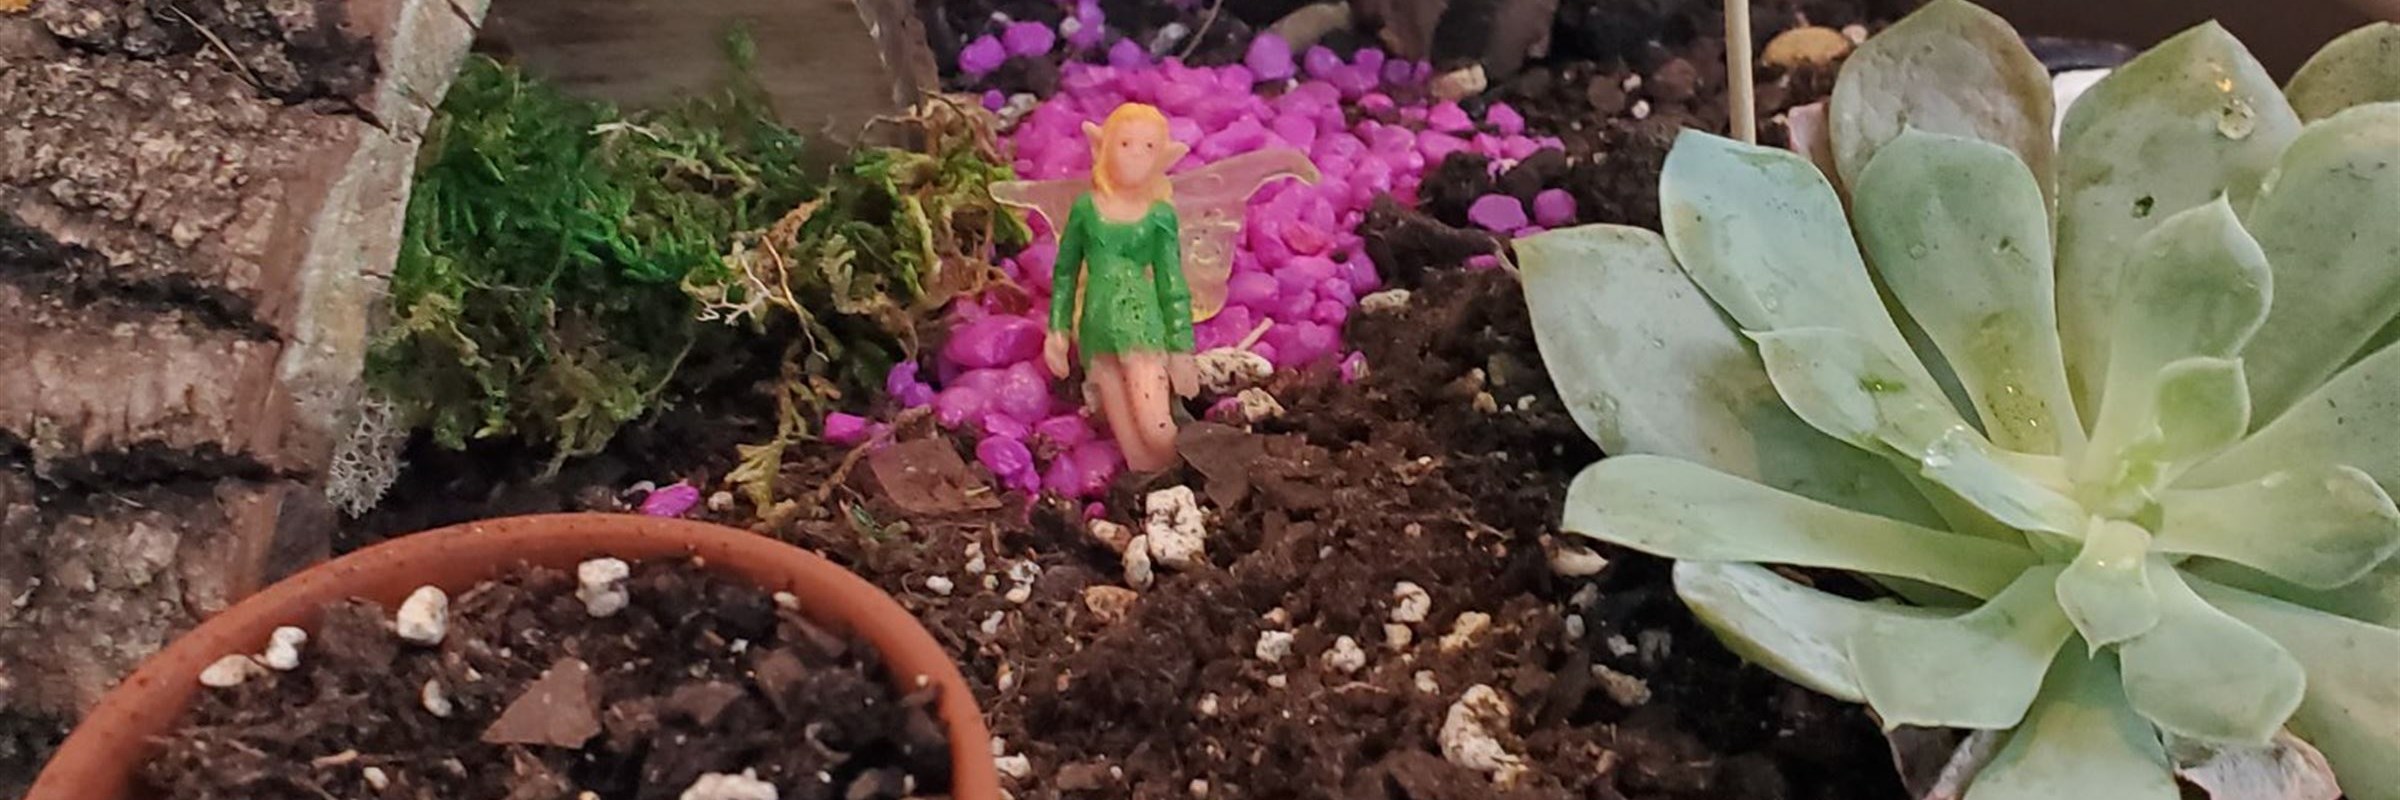 Gnome Home Miniature Garden